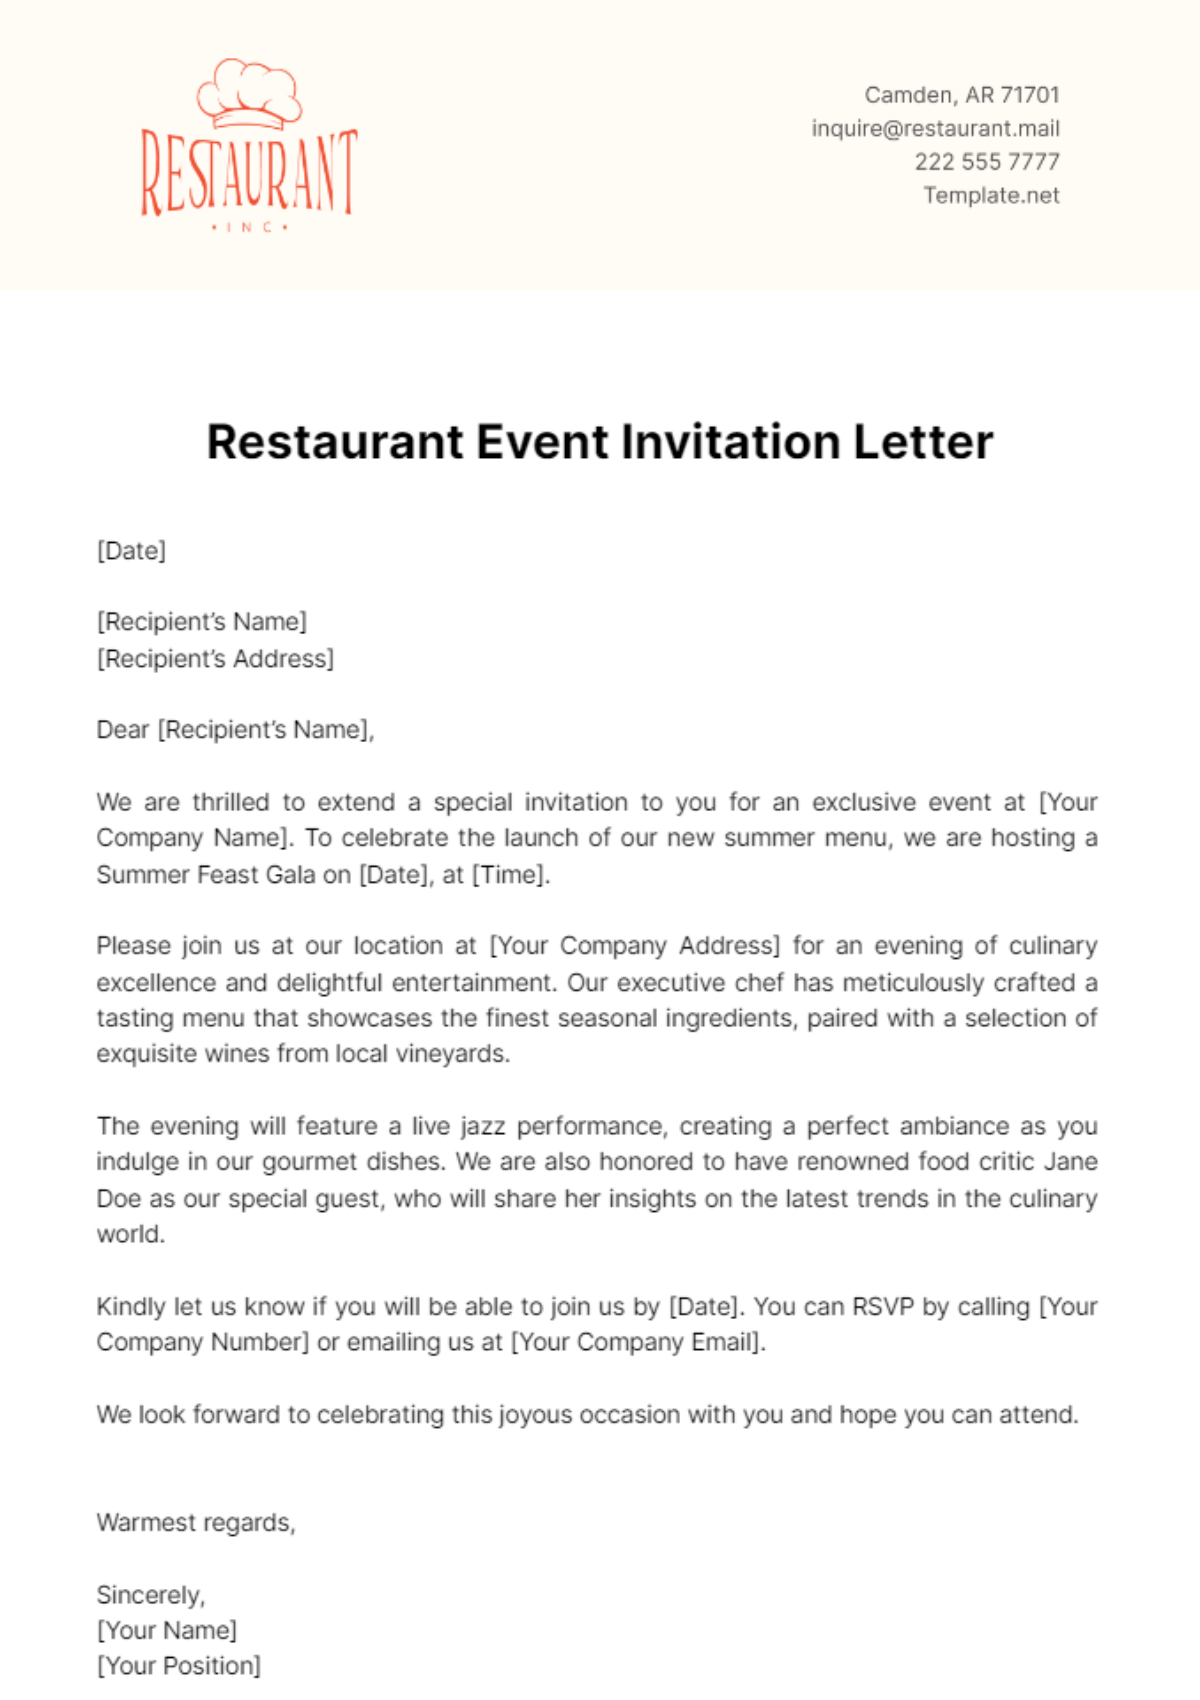 Free Restaurant Event Invitation Letter Template